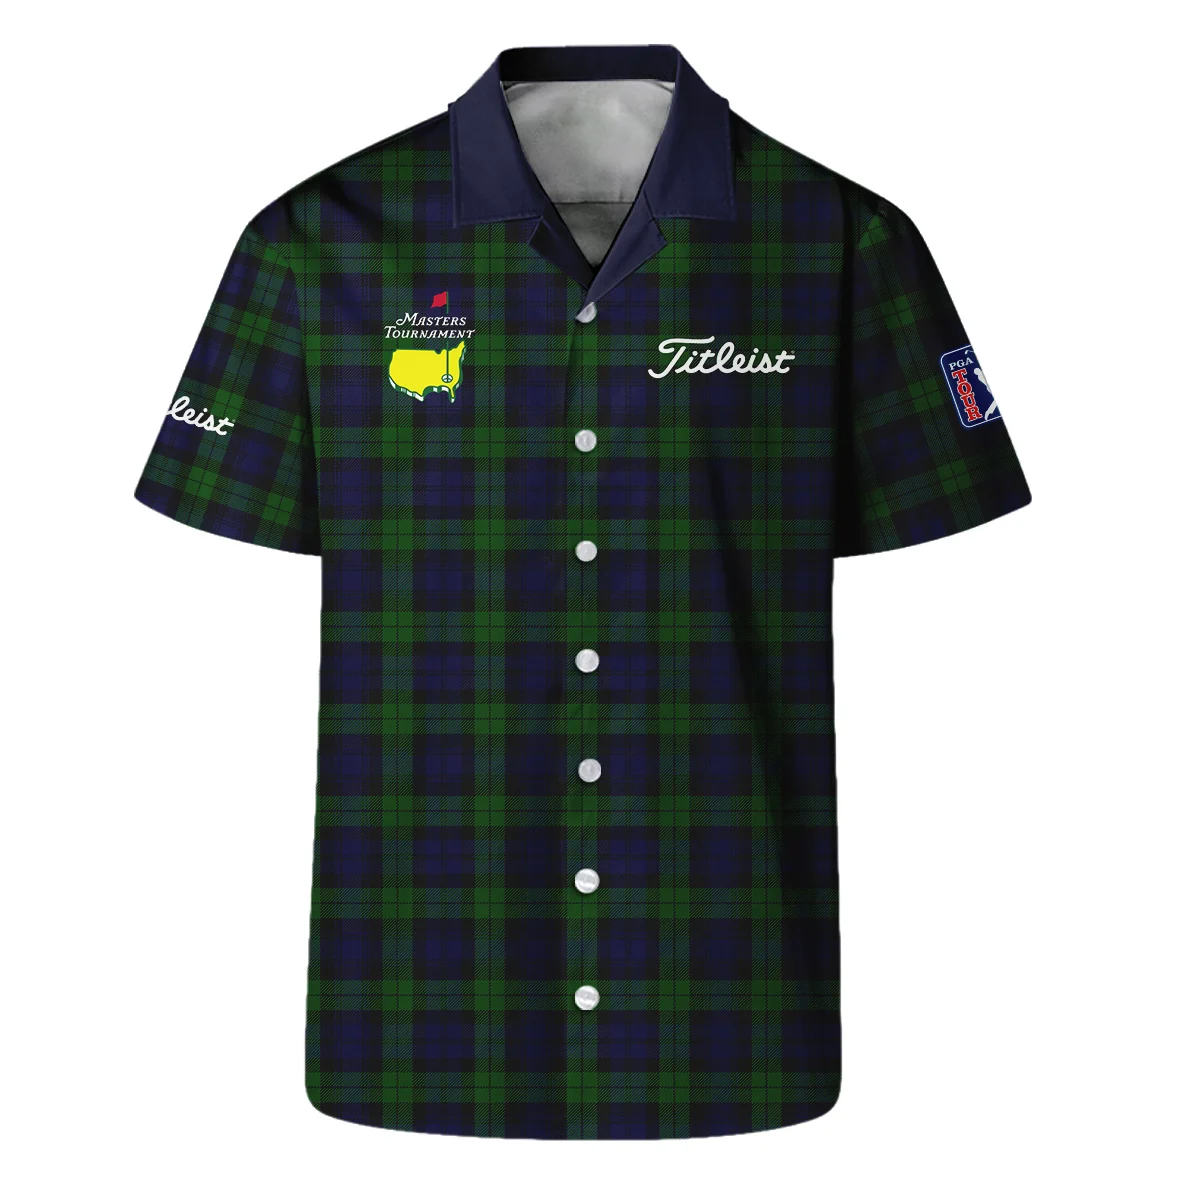 Masters Tournament Titleist Golf Bomber Jacket Sports Green Purple Black Watch Tartan Plaid All Over Print Bomber Jacket